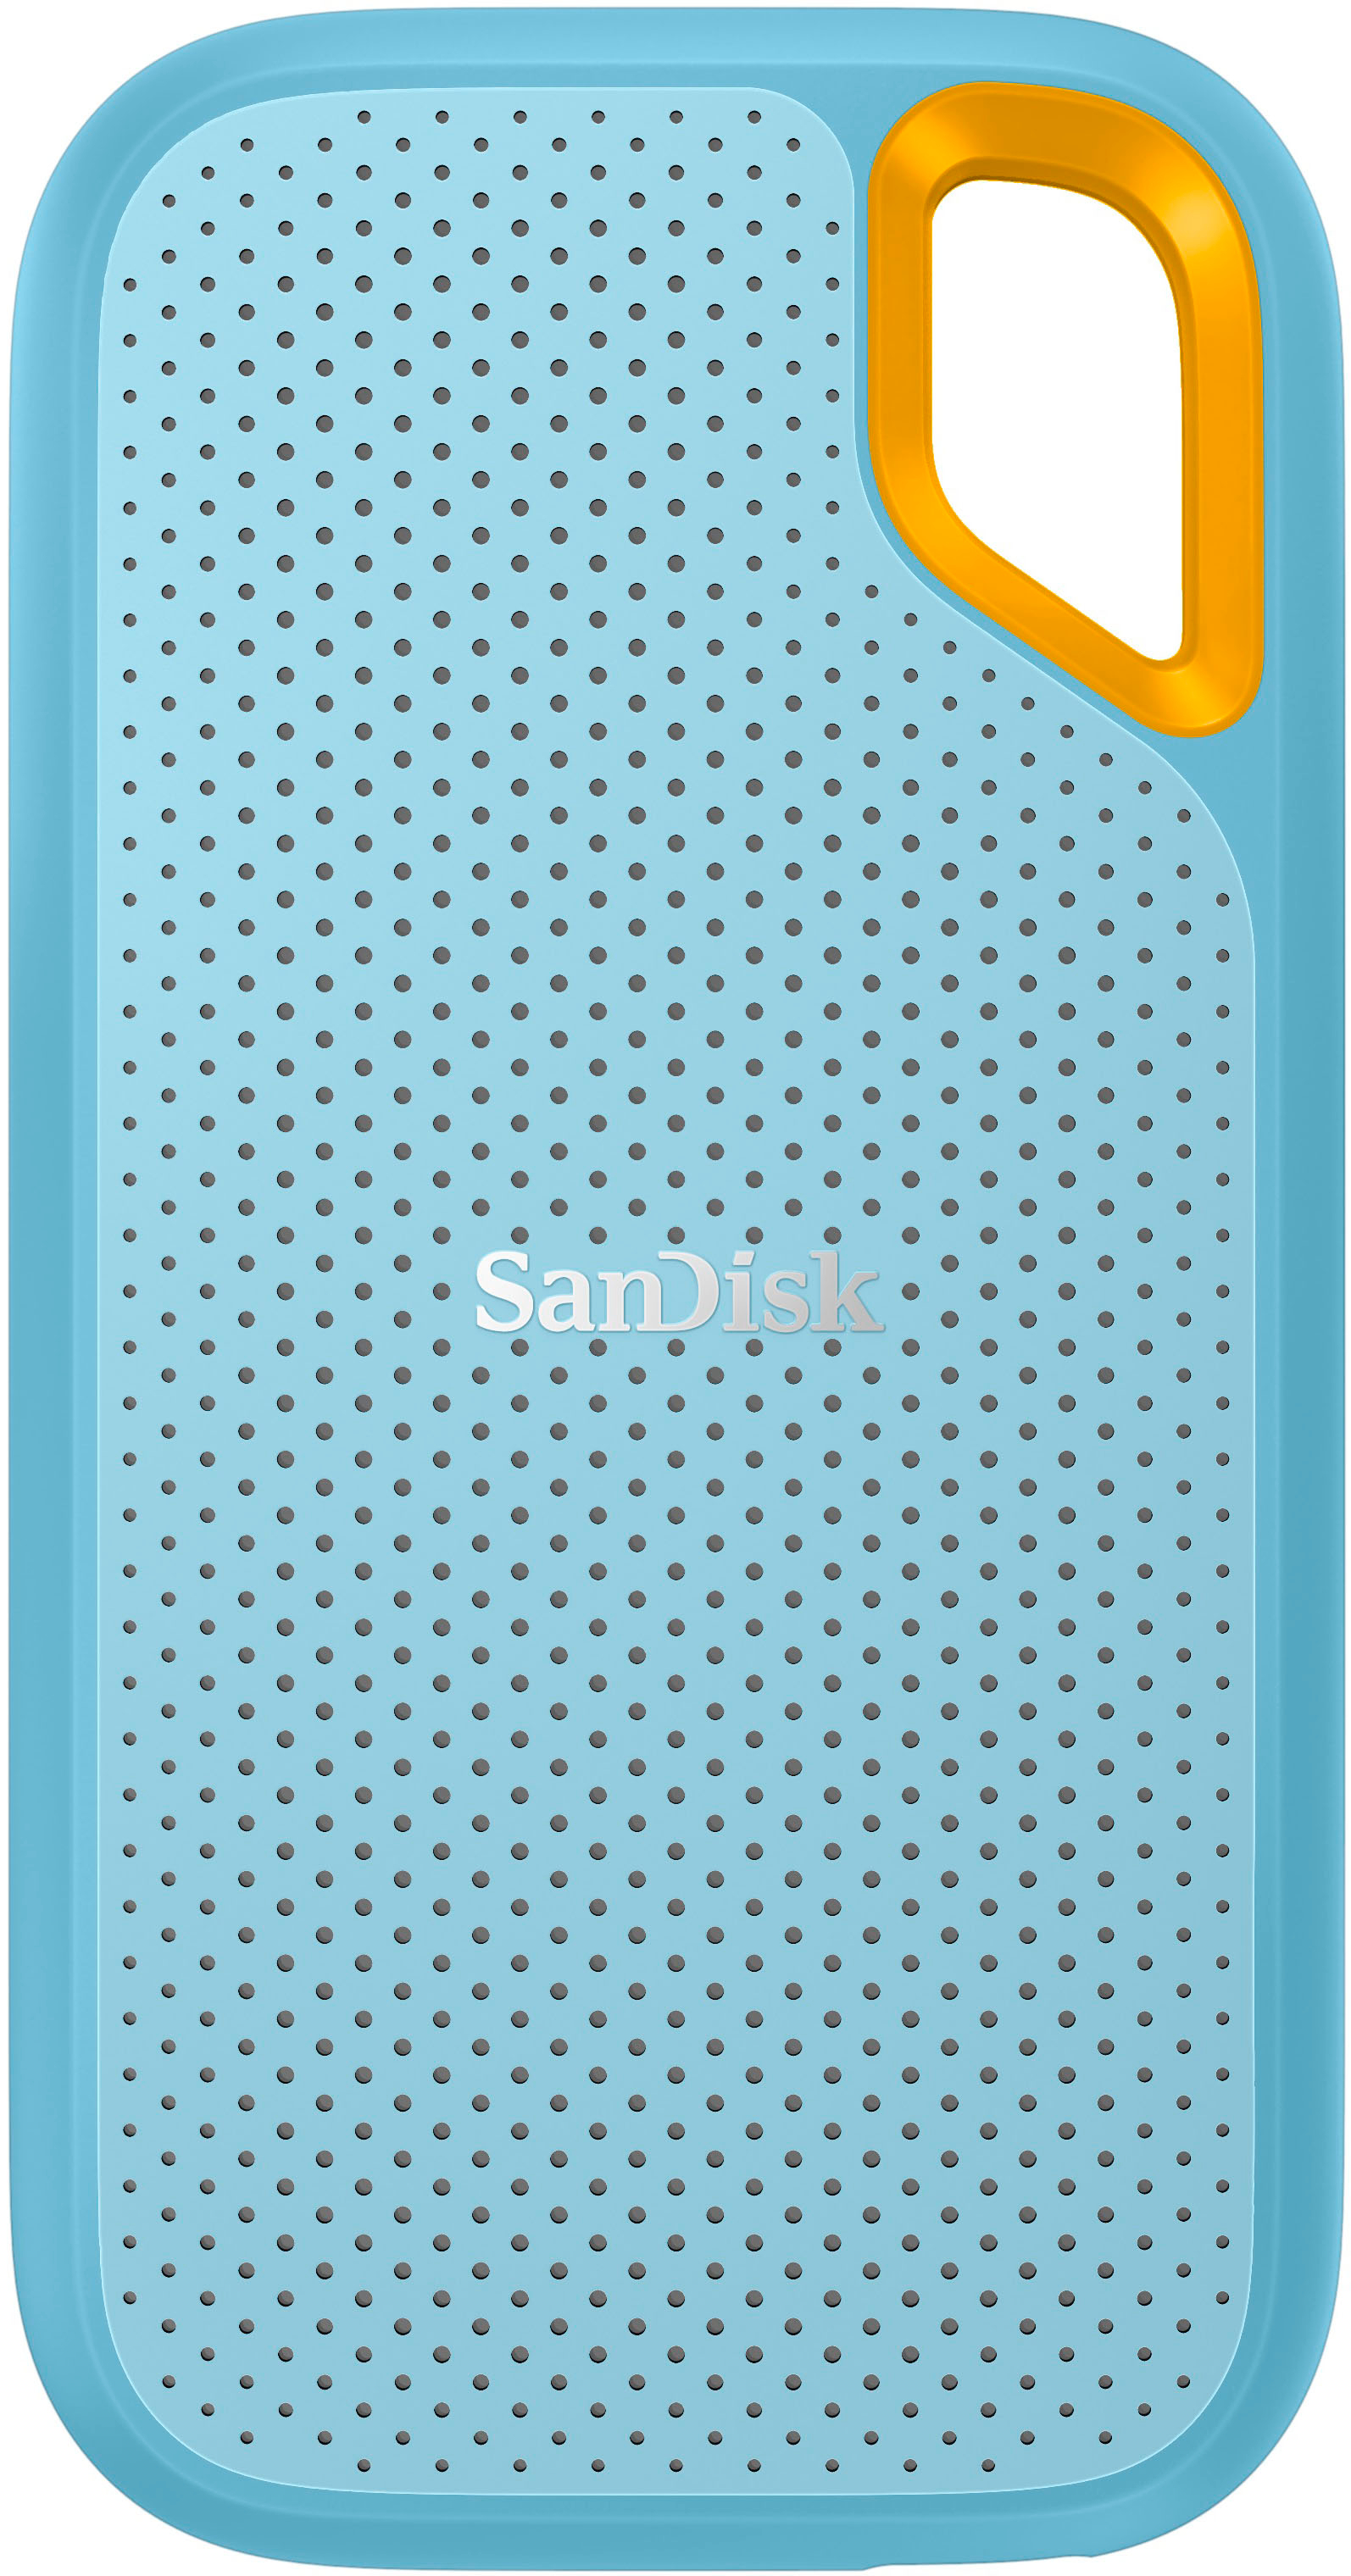 SanDisk 1TB Extreme Portable SSD V2 (Black)